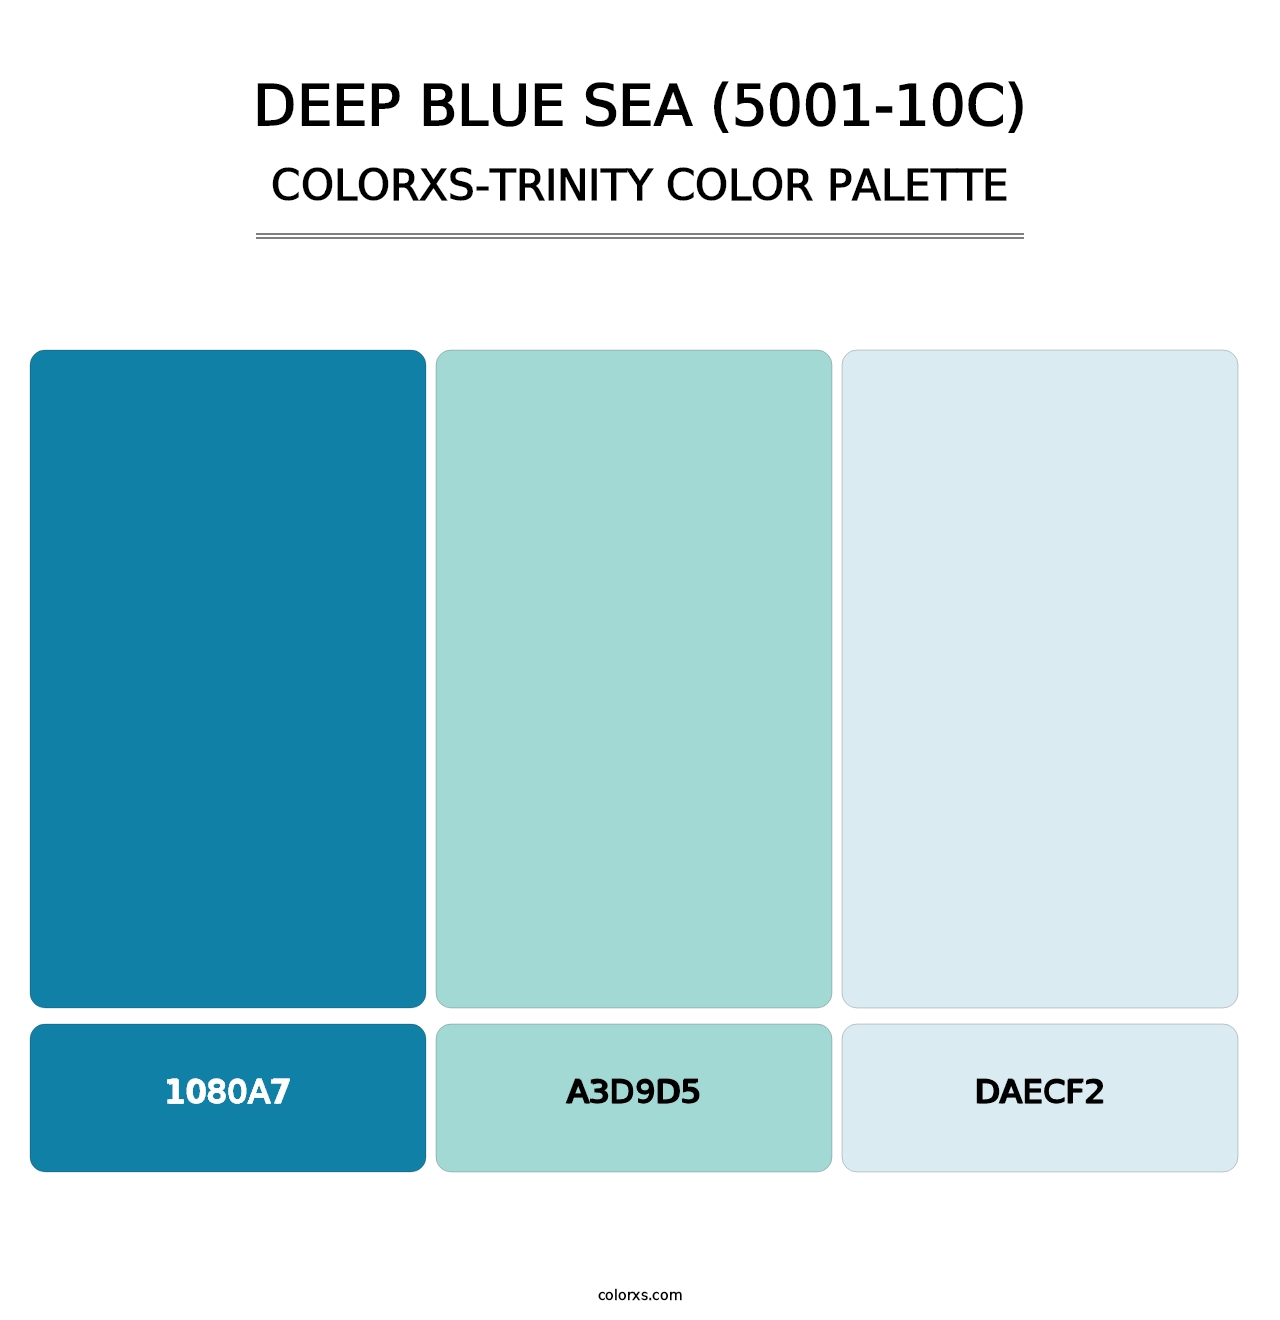 Deep Blue Sea (5001-10C) - Colorxs Trinity Palette